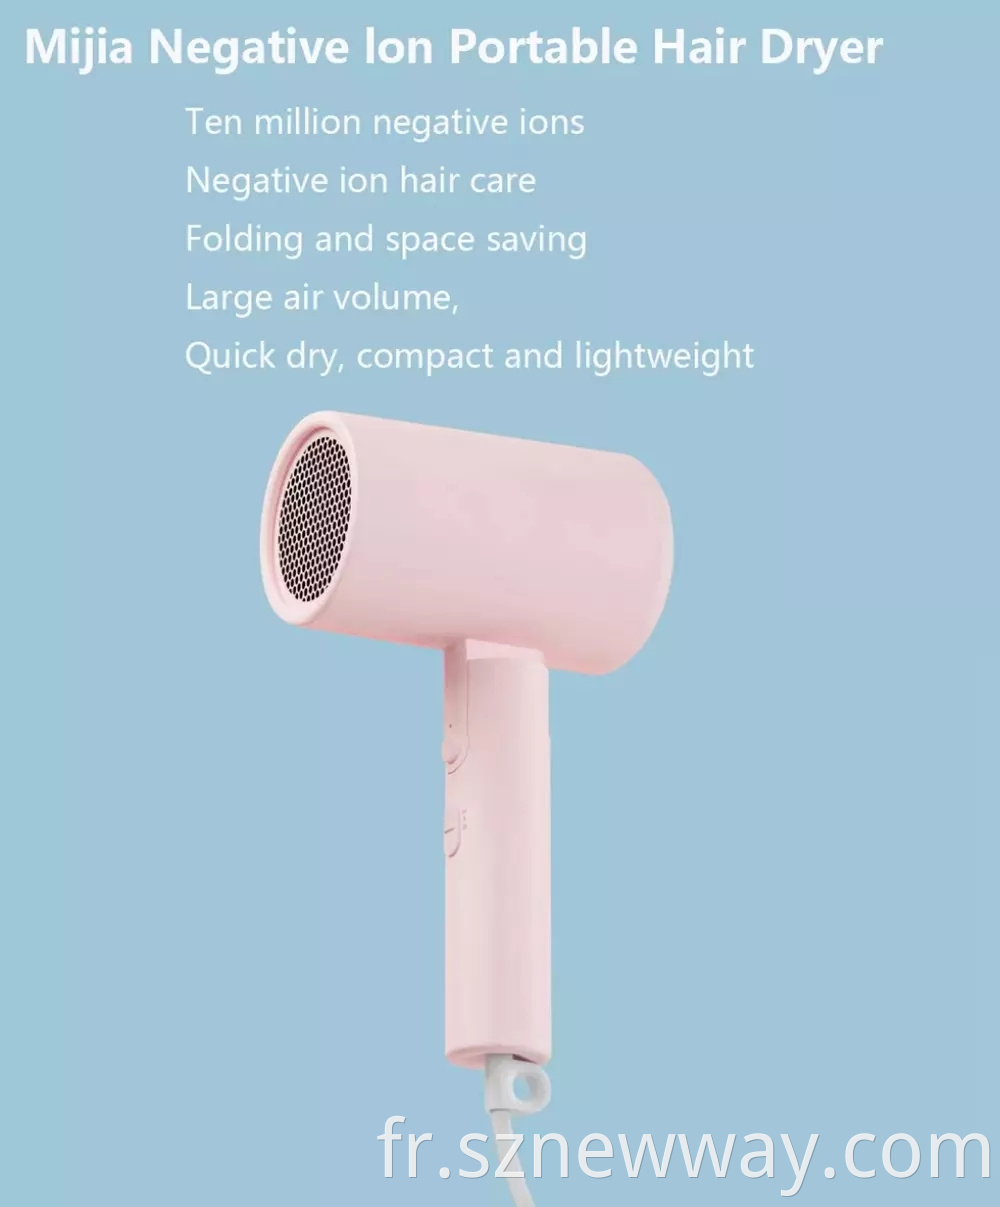 Negative Ion hair dryer